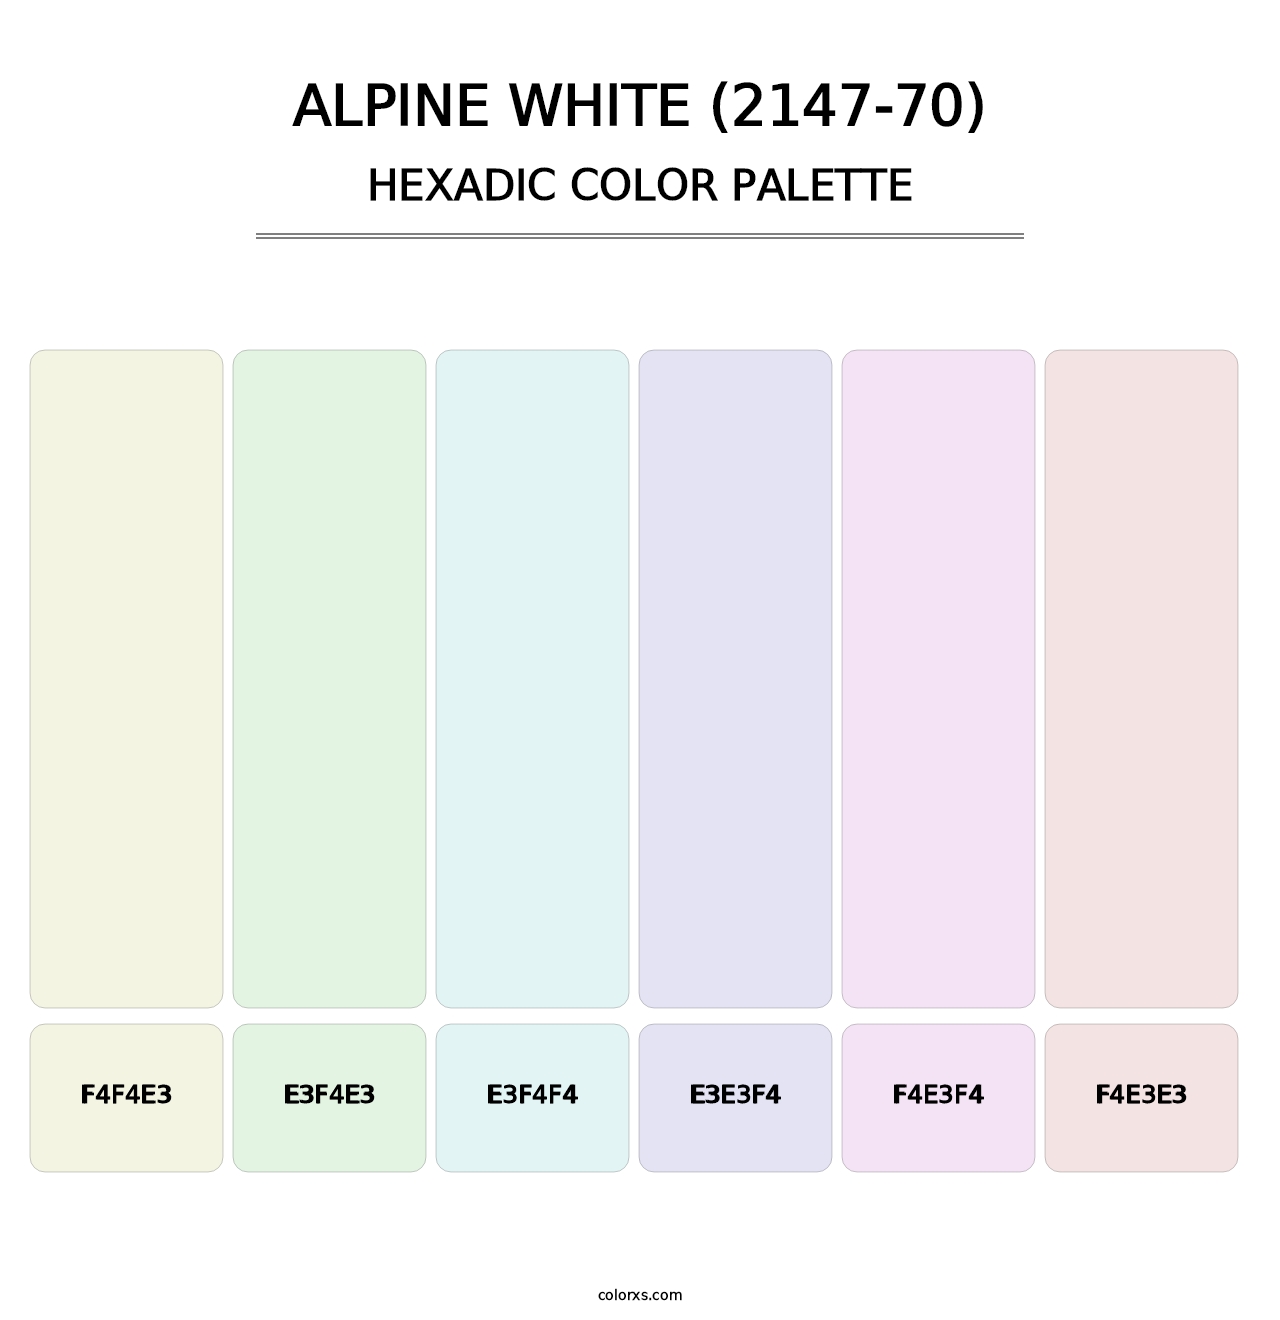 Alpine White (2147-70) - Hexadic Color Palette